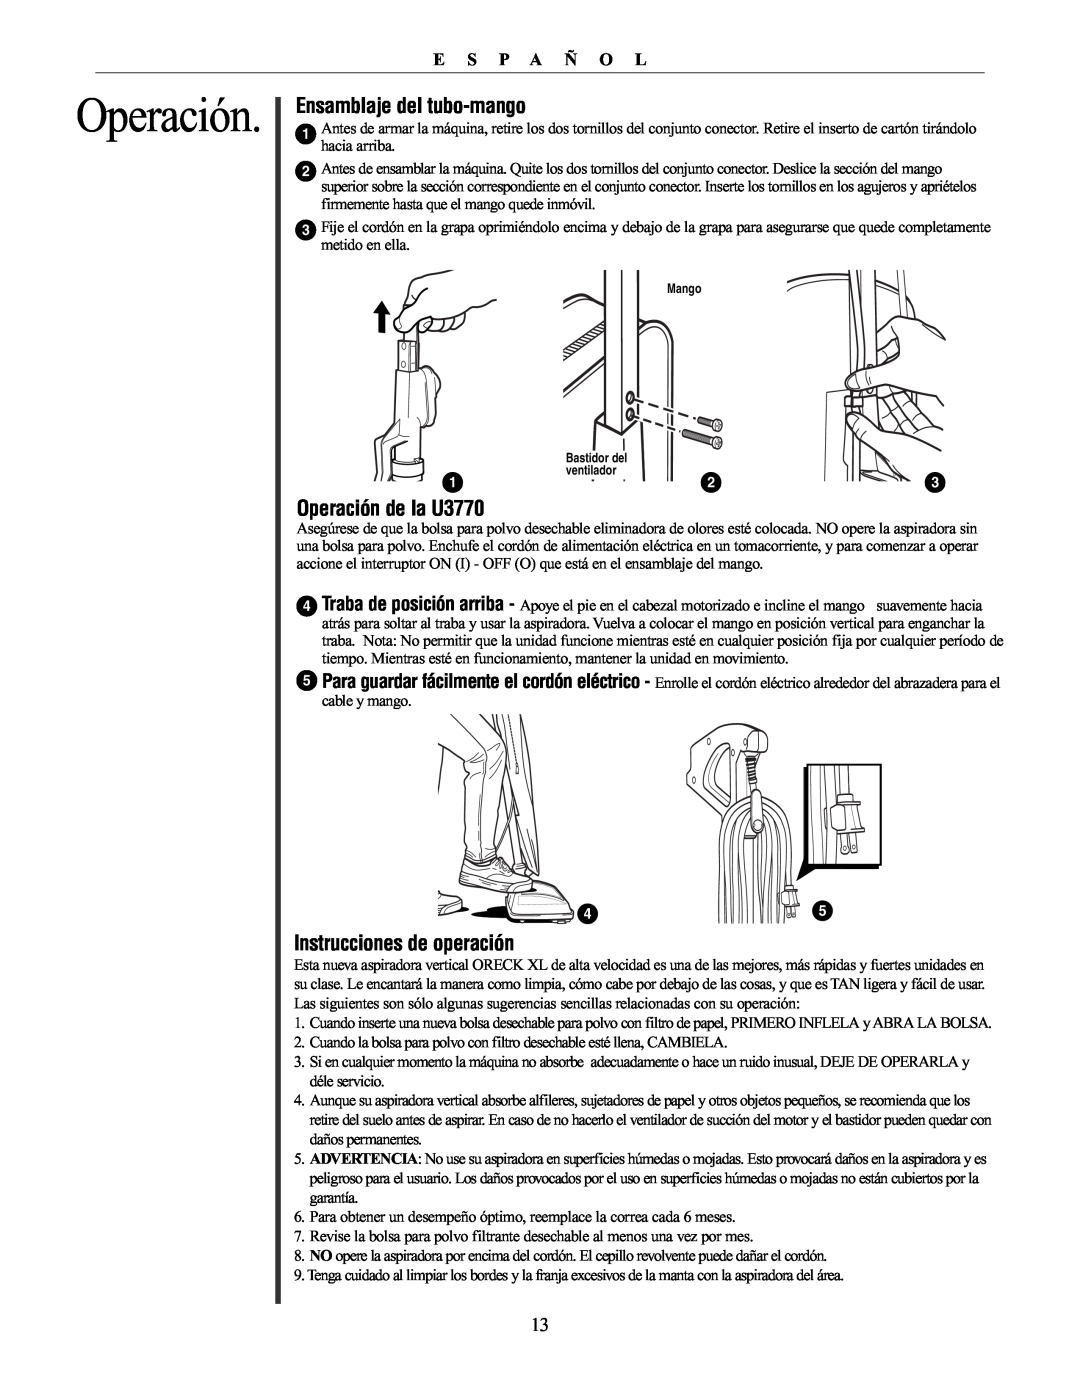 Oreck 76011-01REVC manual Ensamblaje del tubo-mango, Operación de la U3770, Instrucciones de operación, E S P A Ñ O L 